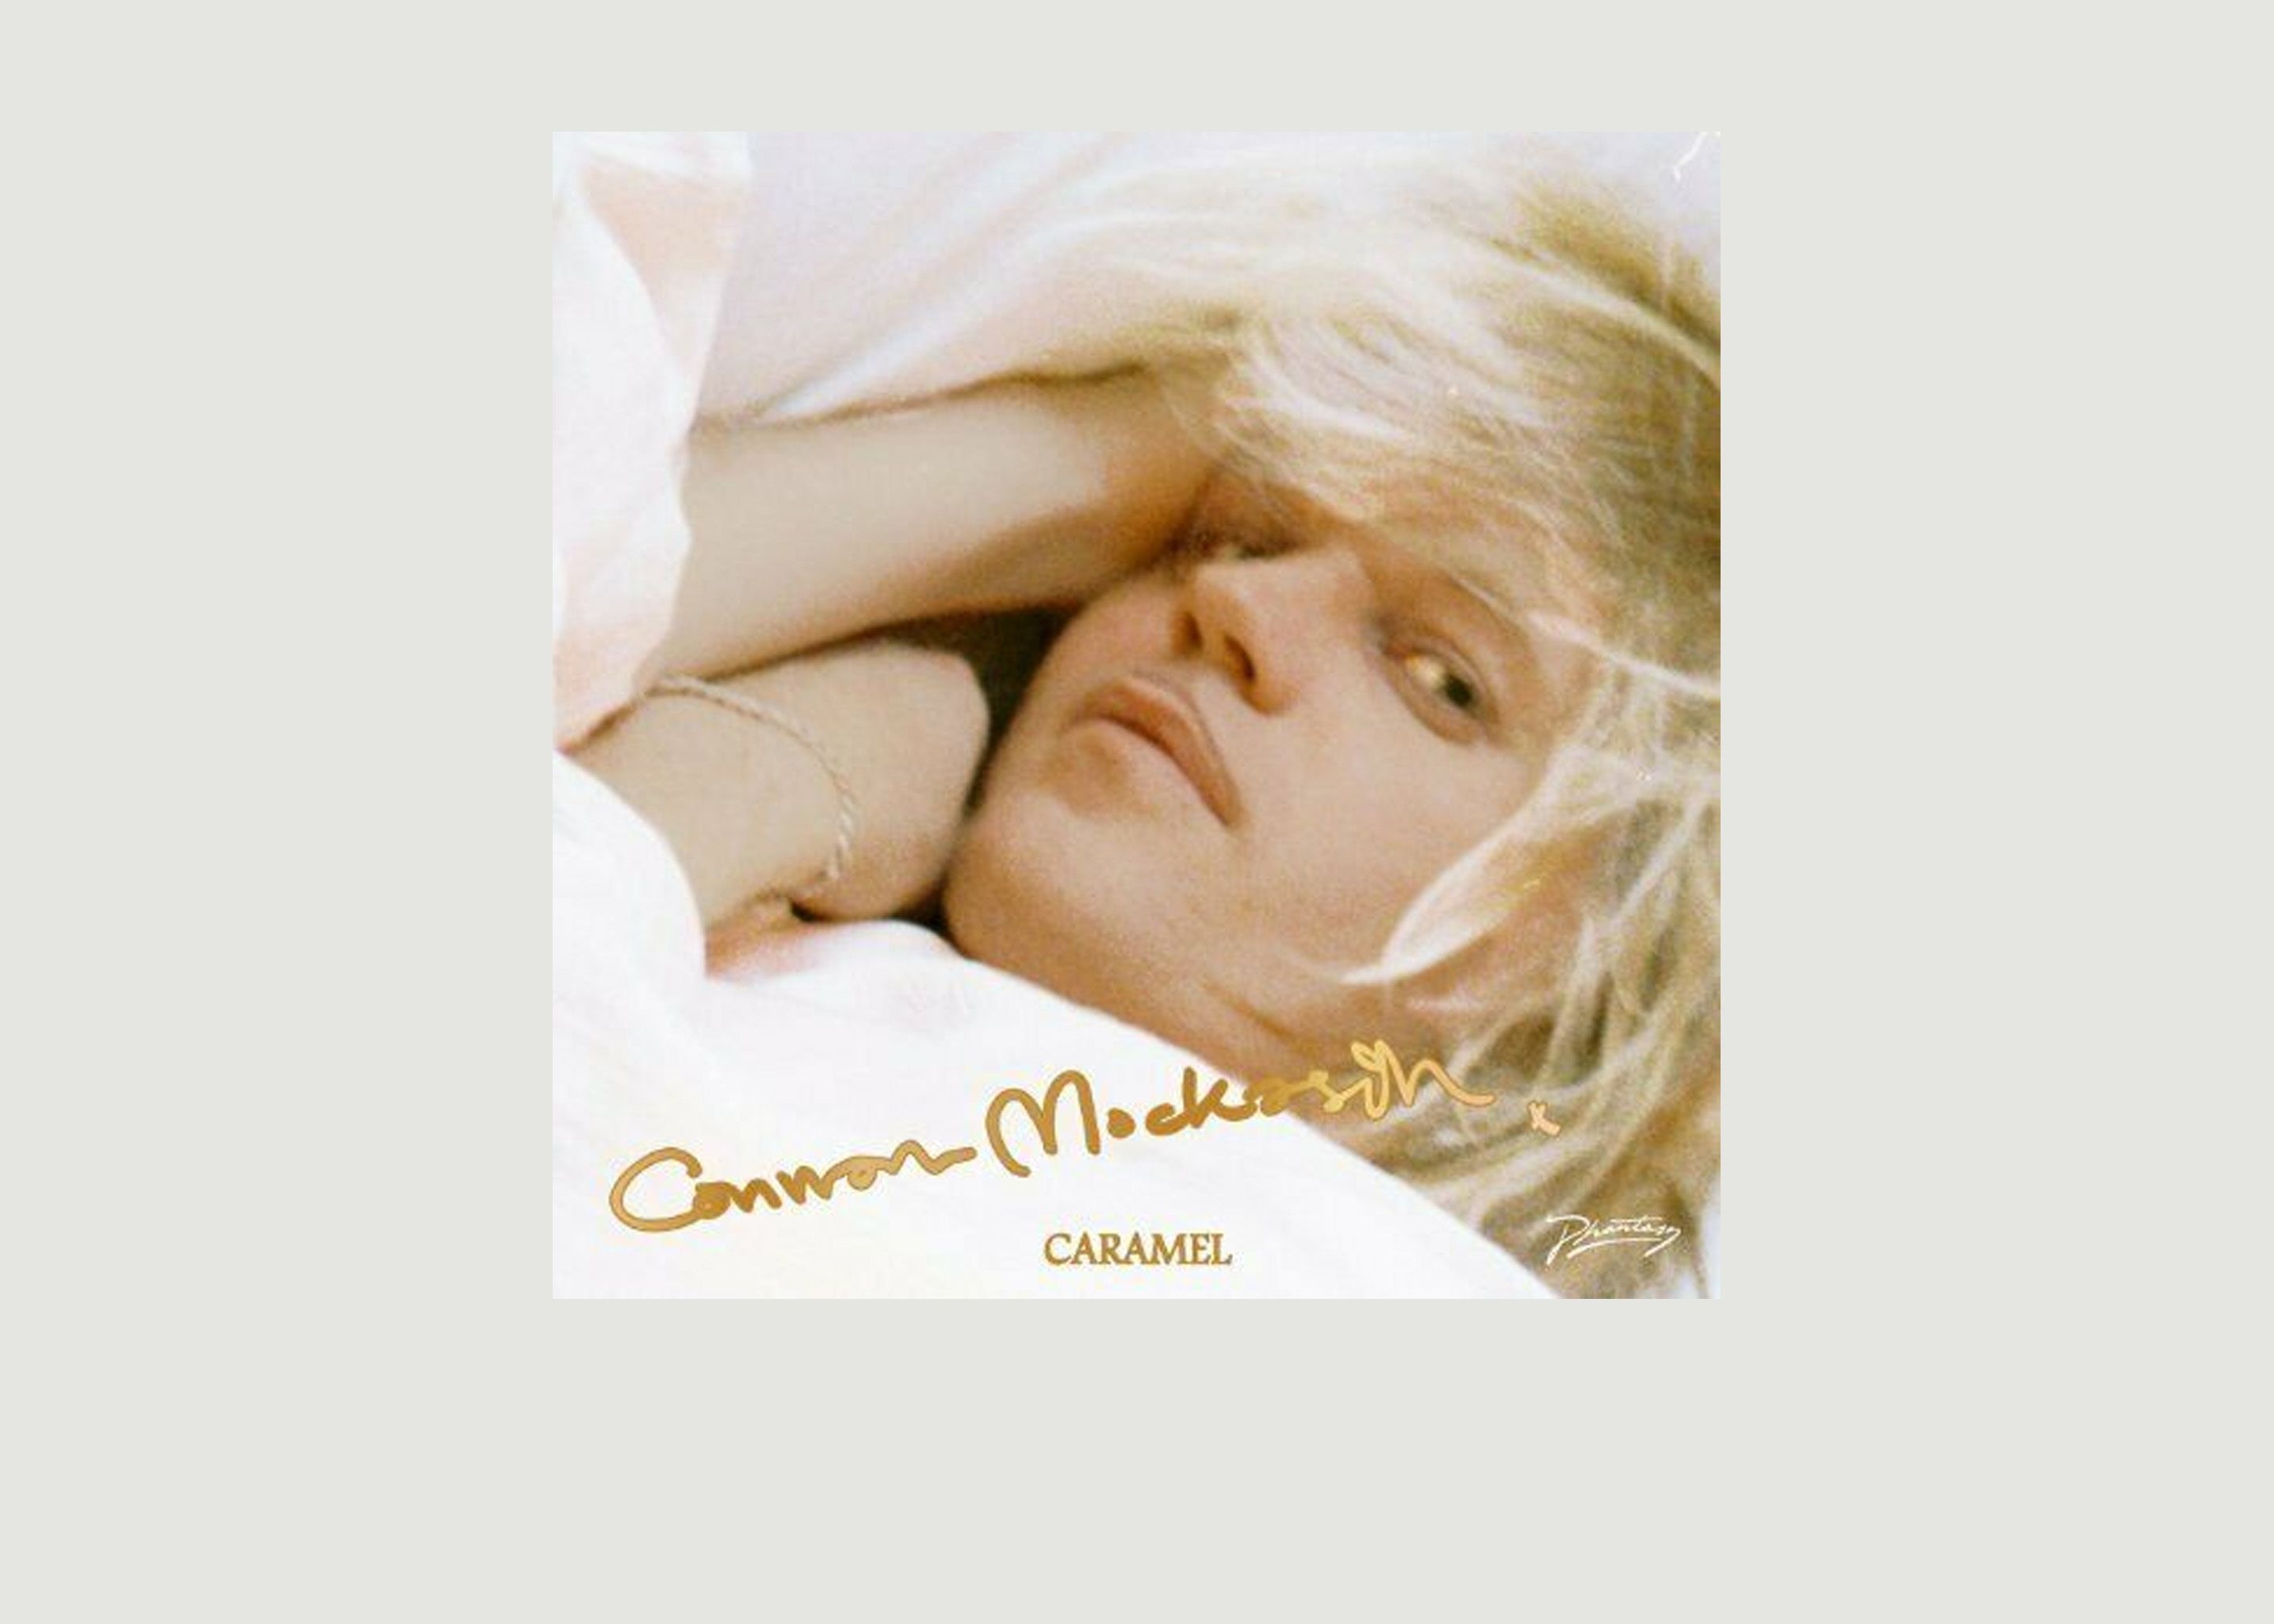 Caramel - Connan Mockasin - La vinyl-thèque idéale